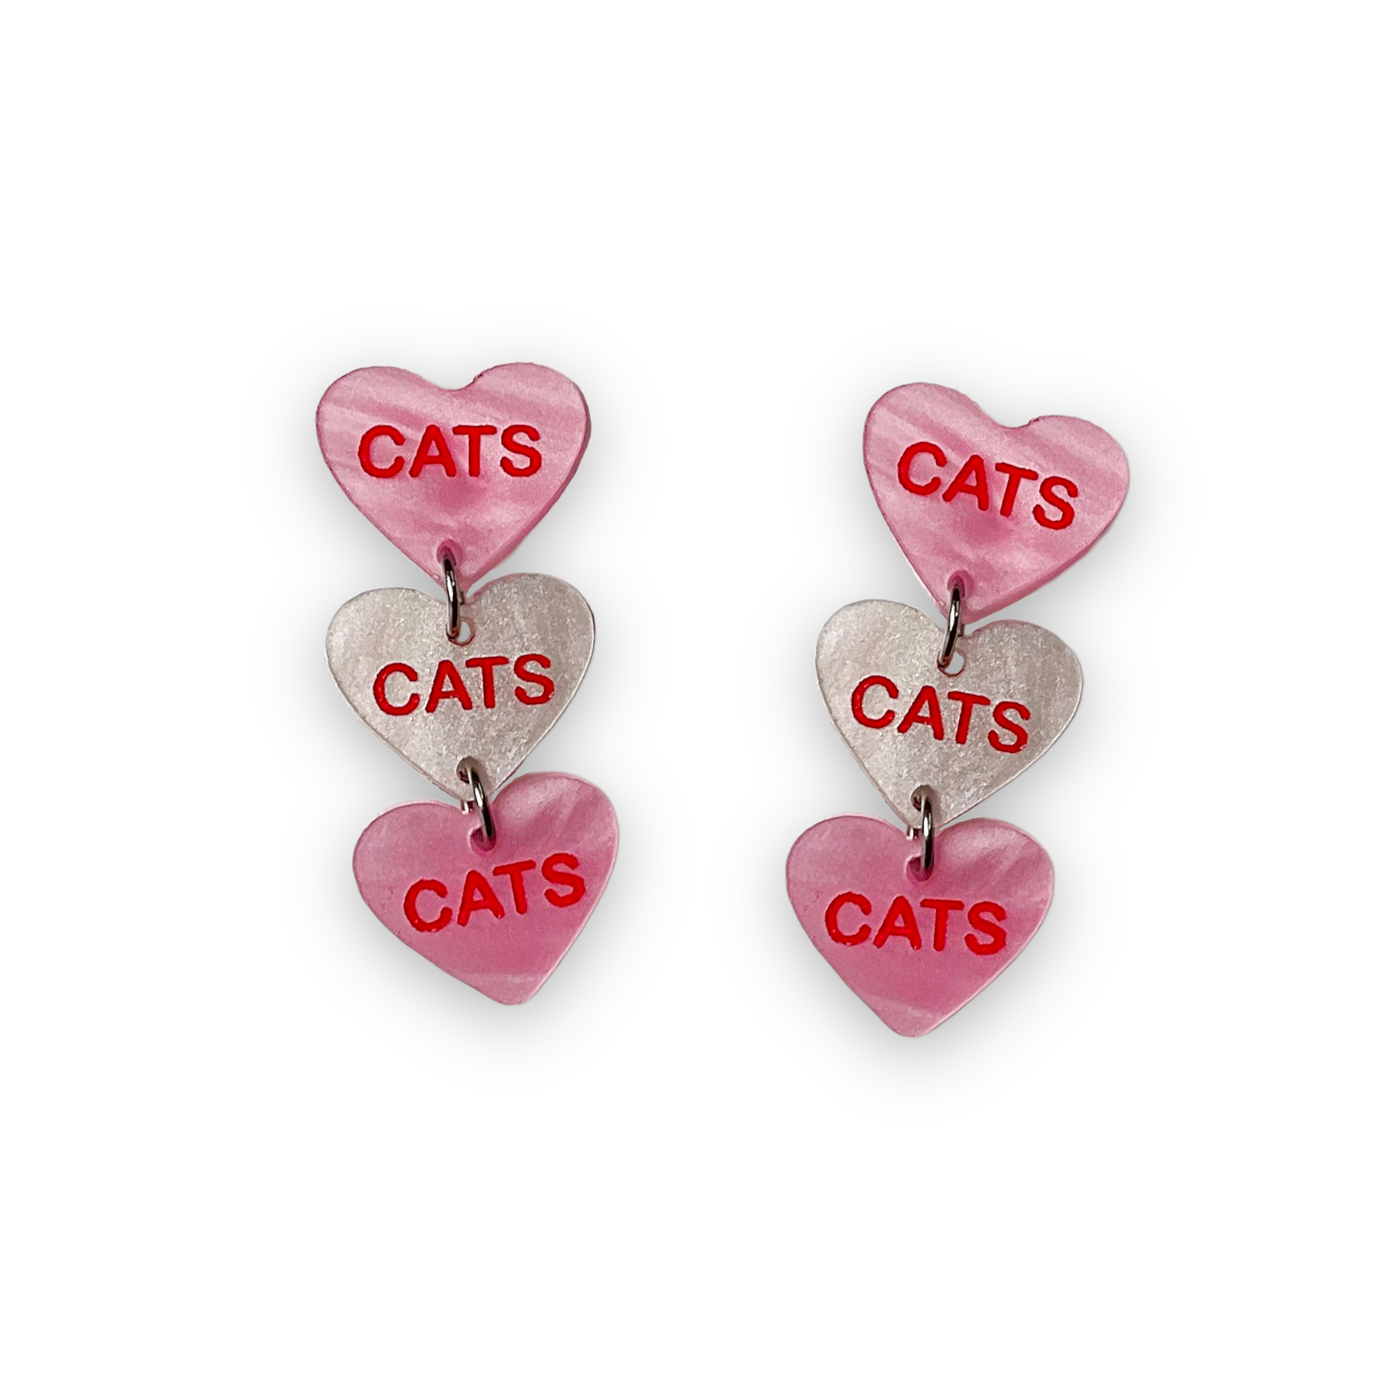 Cats Cats Cats Candy Heart Dangle Earrings